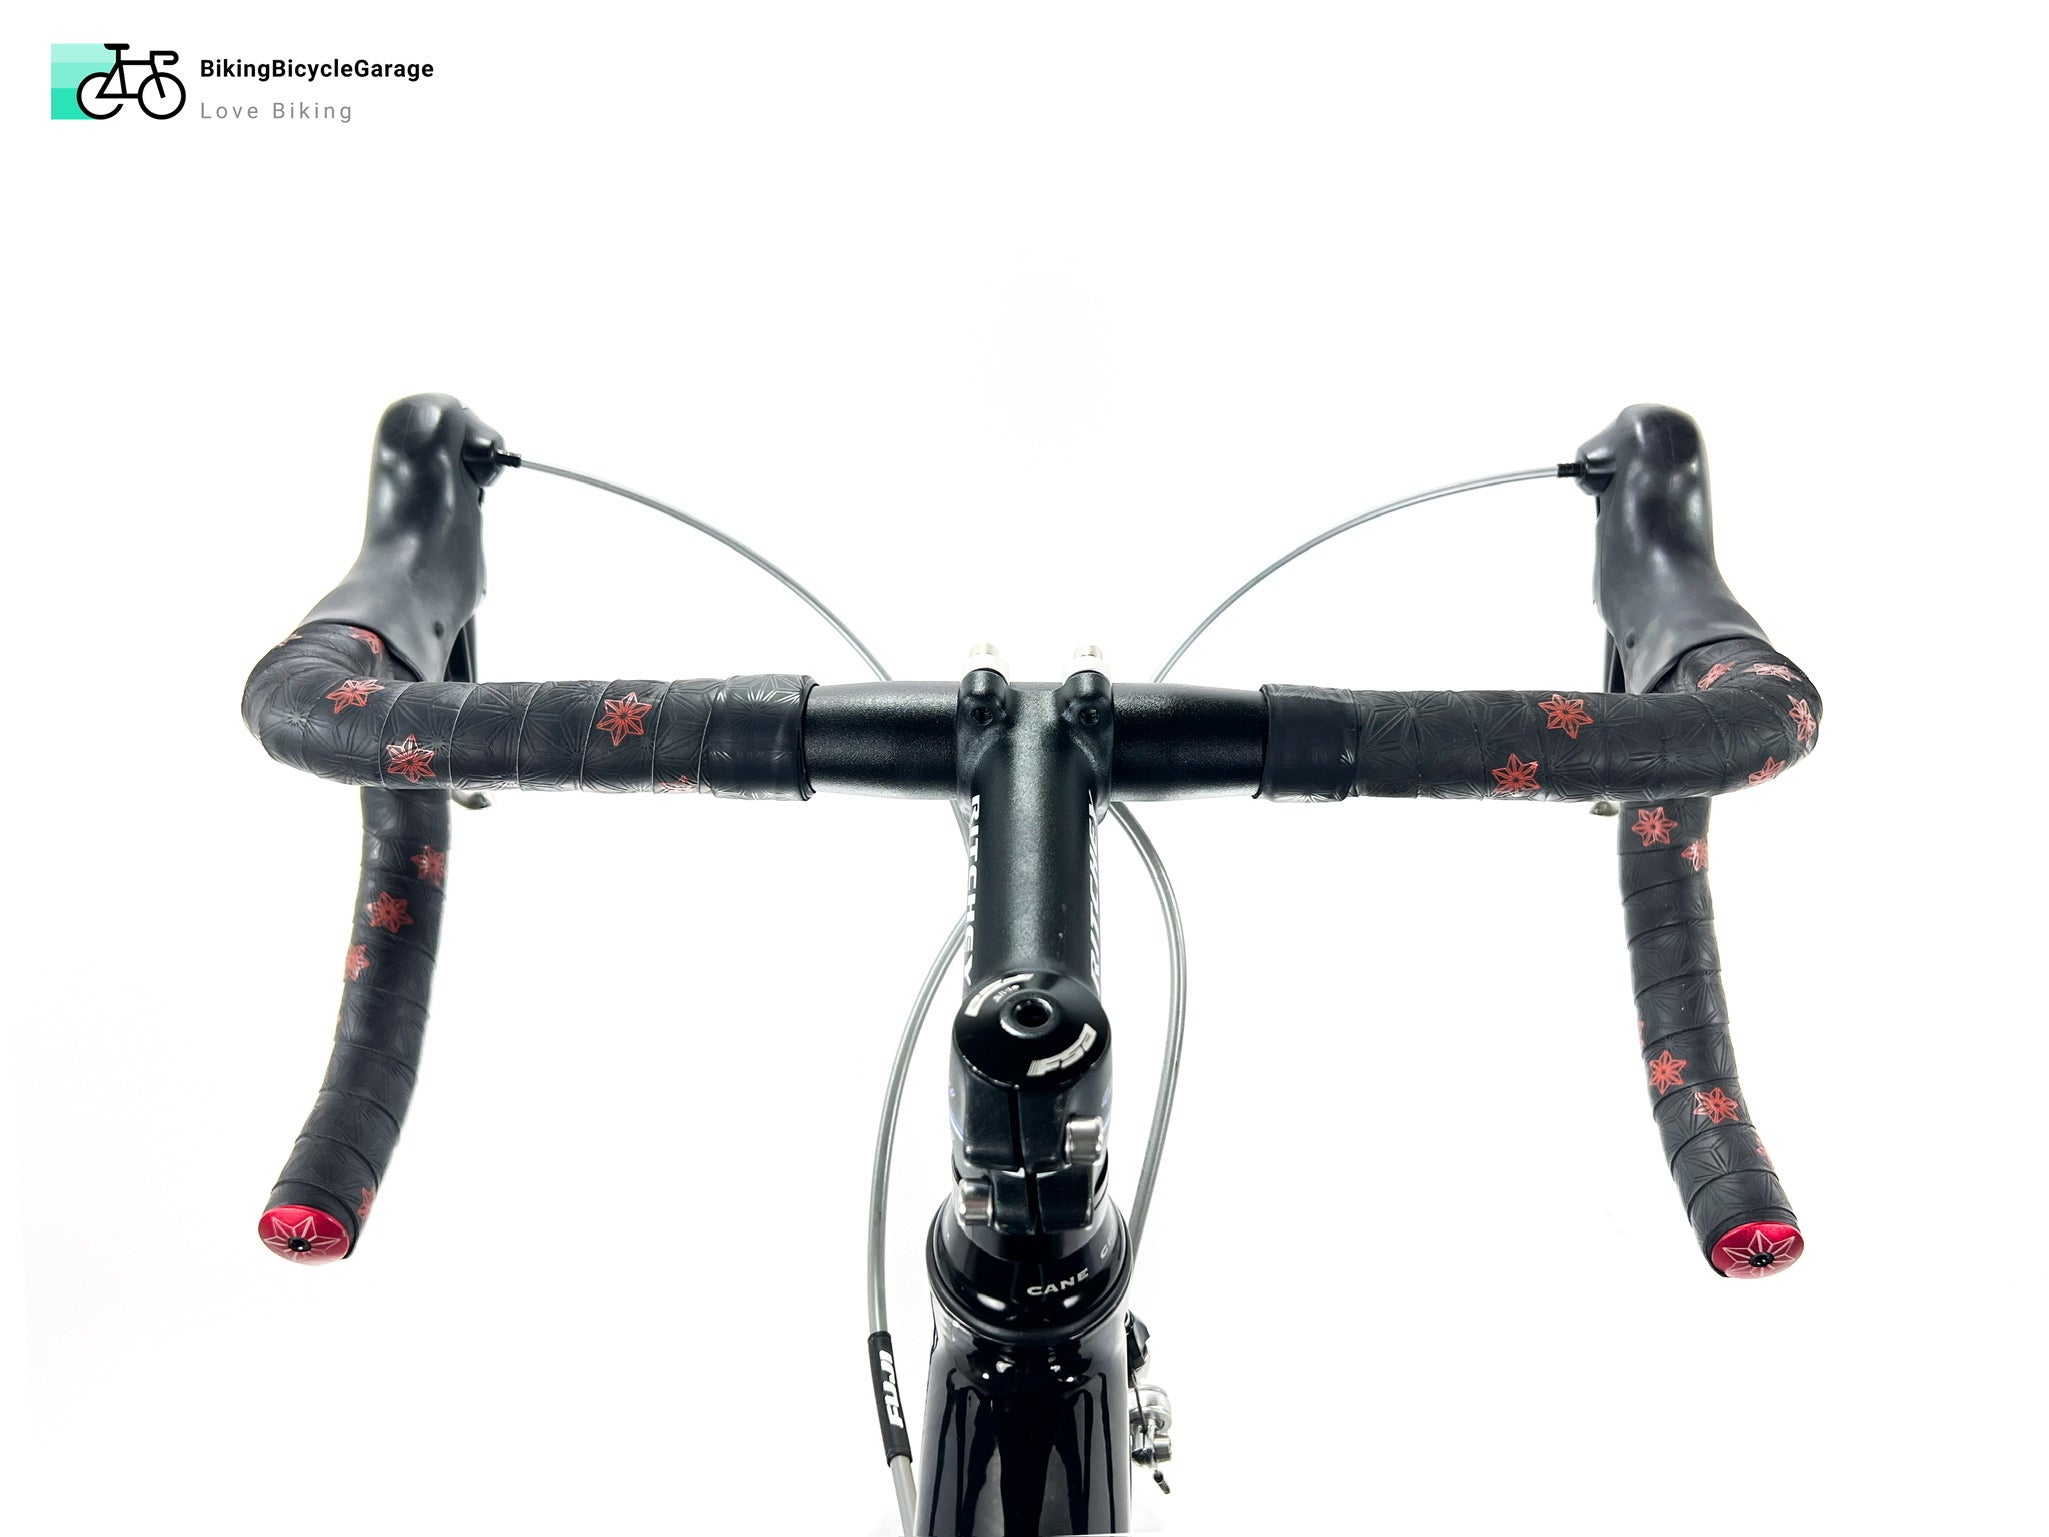 Fuji Team Issue, Shimano Ultegra, Carbon Fiber Road Bike- 2007, 56cm